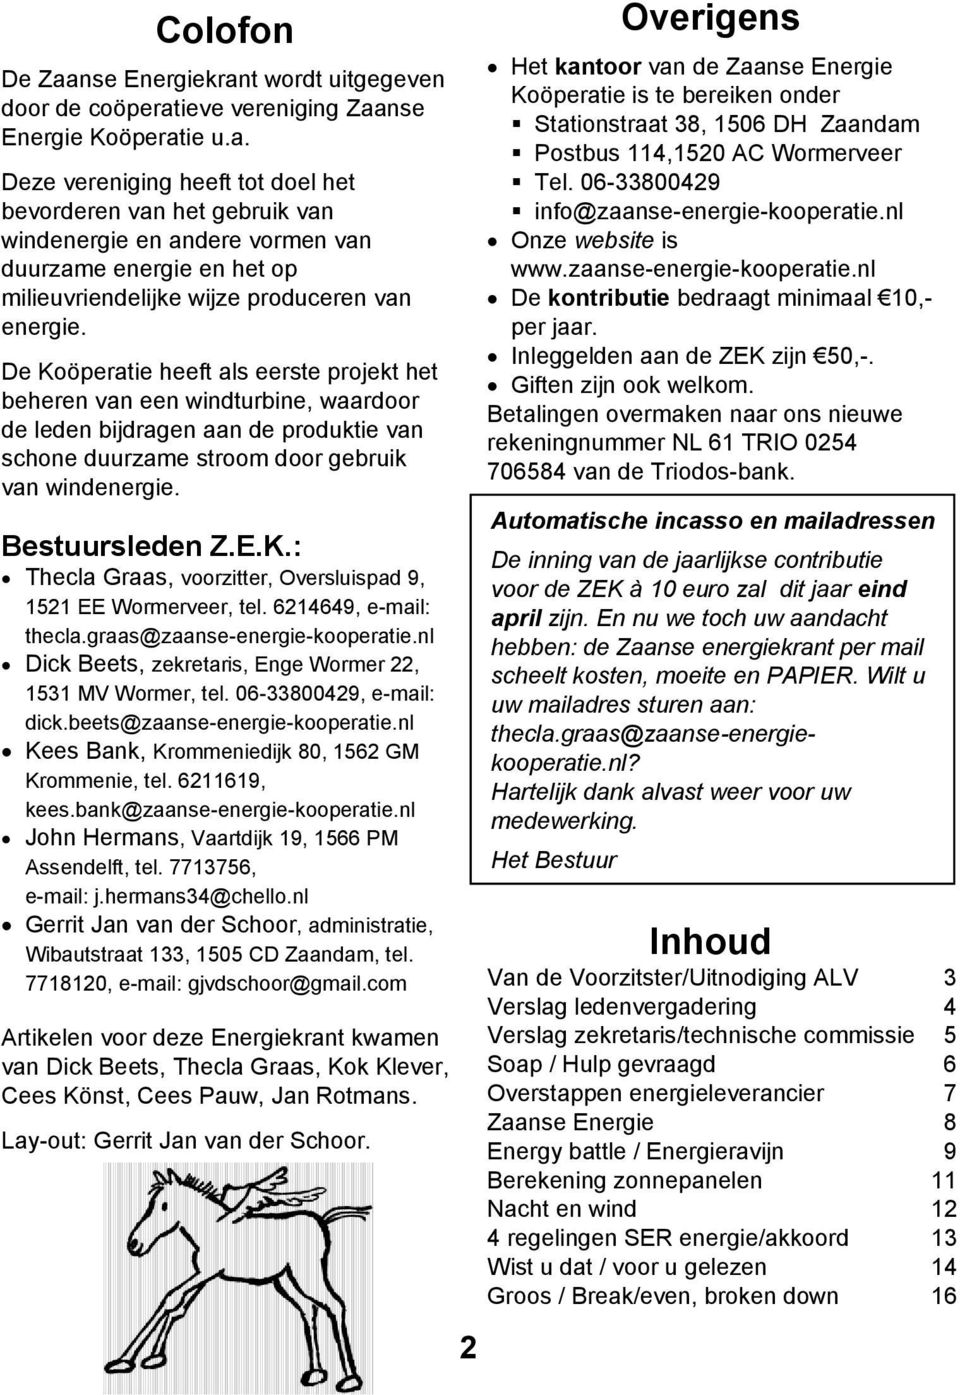 6214649, e-mail: thecla.graas@zaanse-energie-kooperatie.nl Dick Beets, zekretaris, Enge Wormer 22, 1531 MV Wormer, tel. 06-33800429, e-mail: dick.beets@zaanse-energie-kooperatie.